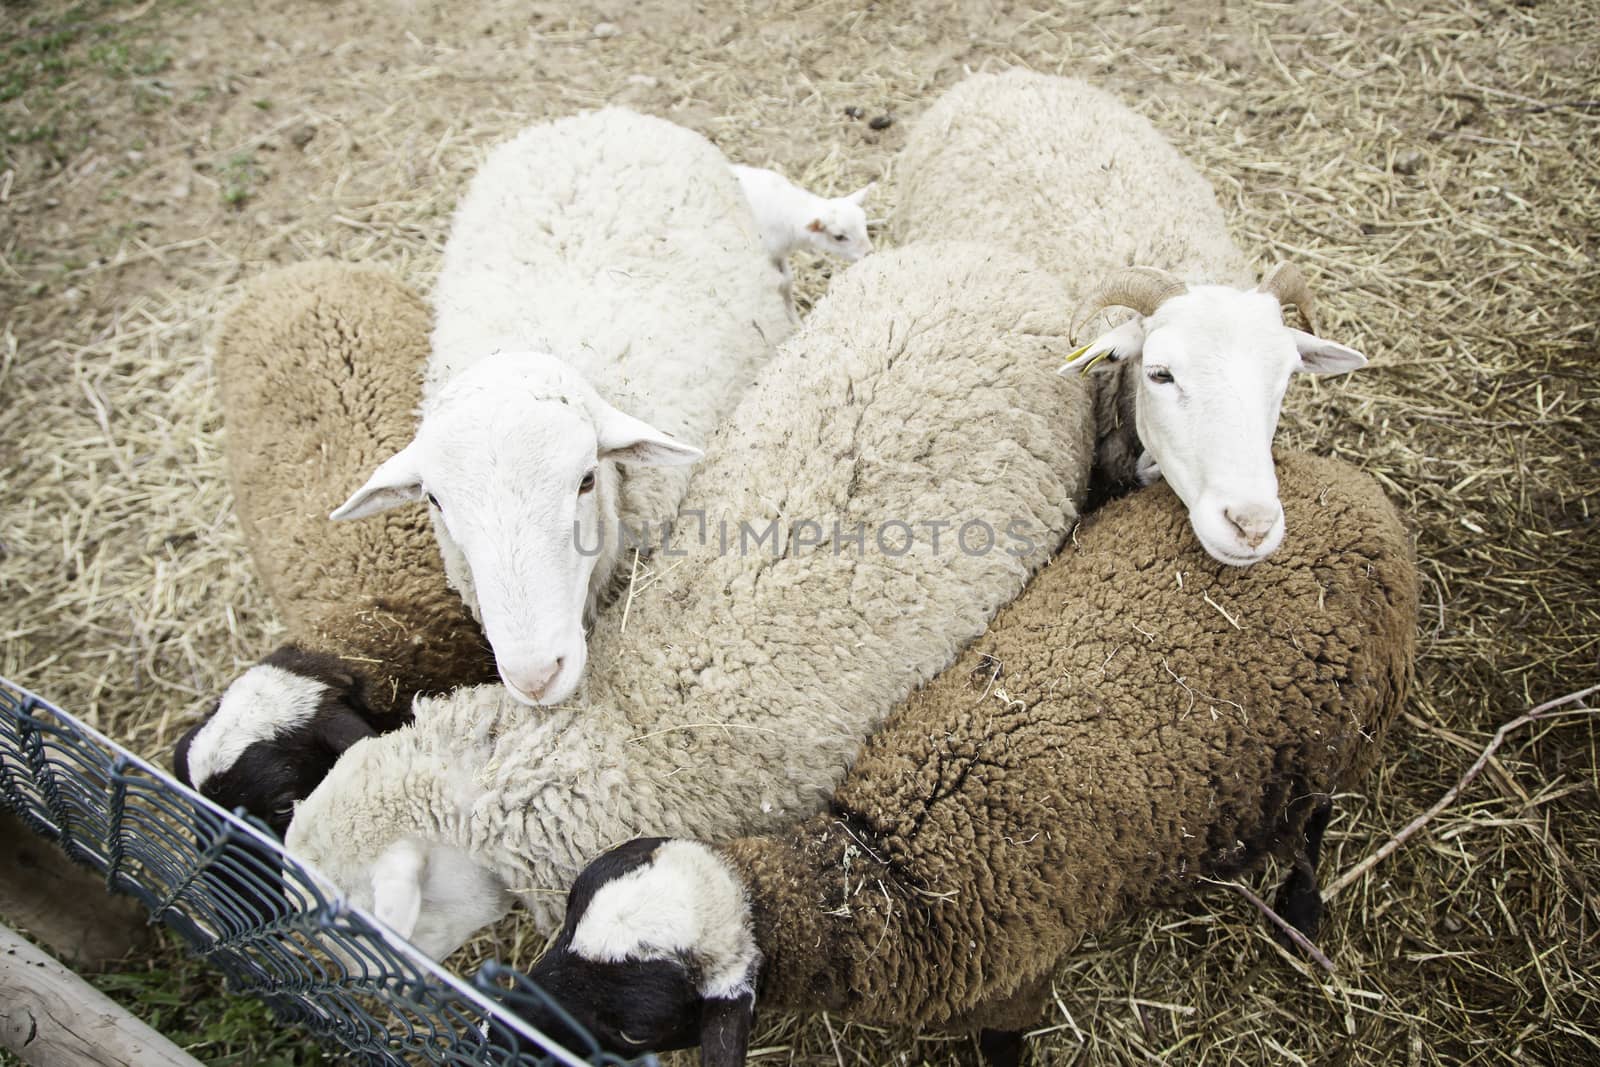 Sheep on a farm, detail of a mammal, farm animal, wool